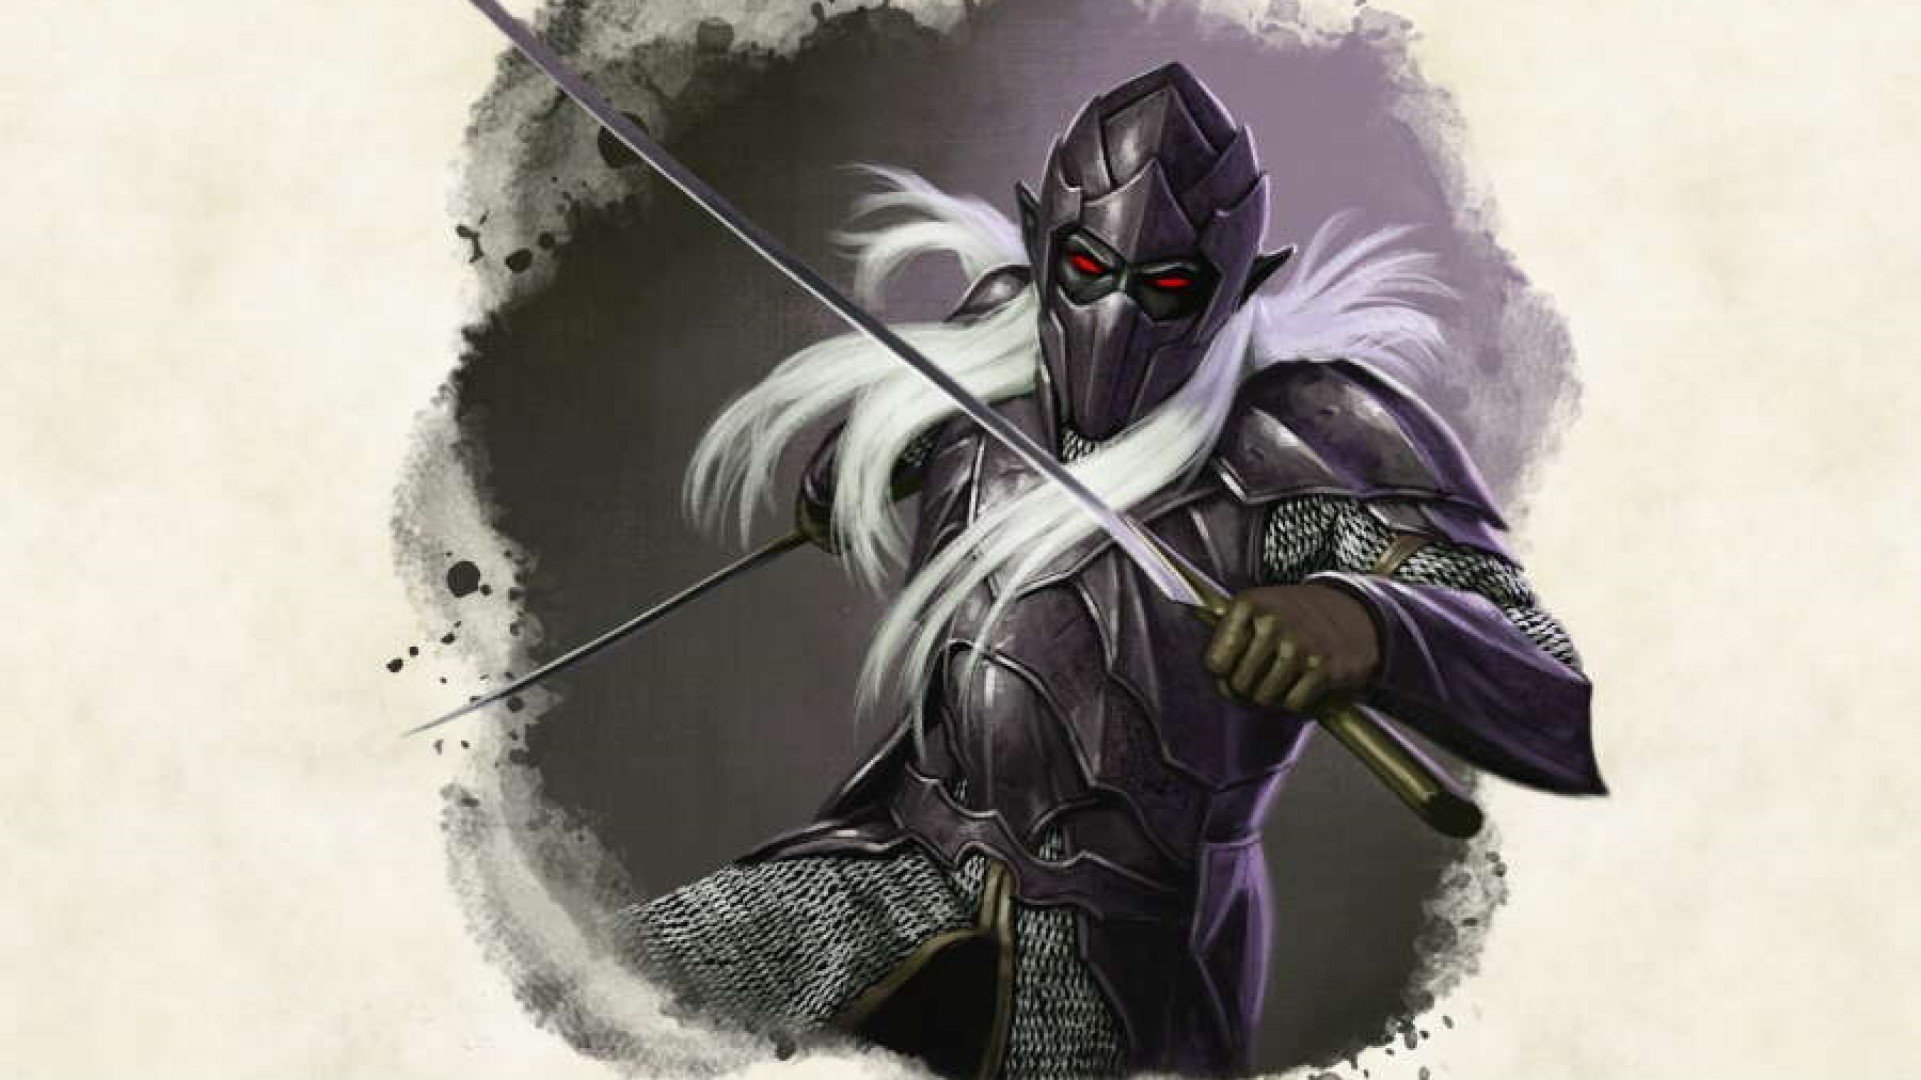 DnD armor 5e - Wizards of the Coast art of a drow in heavy armor wielding a sword